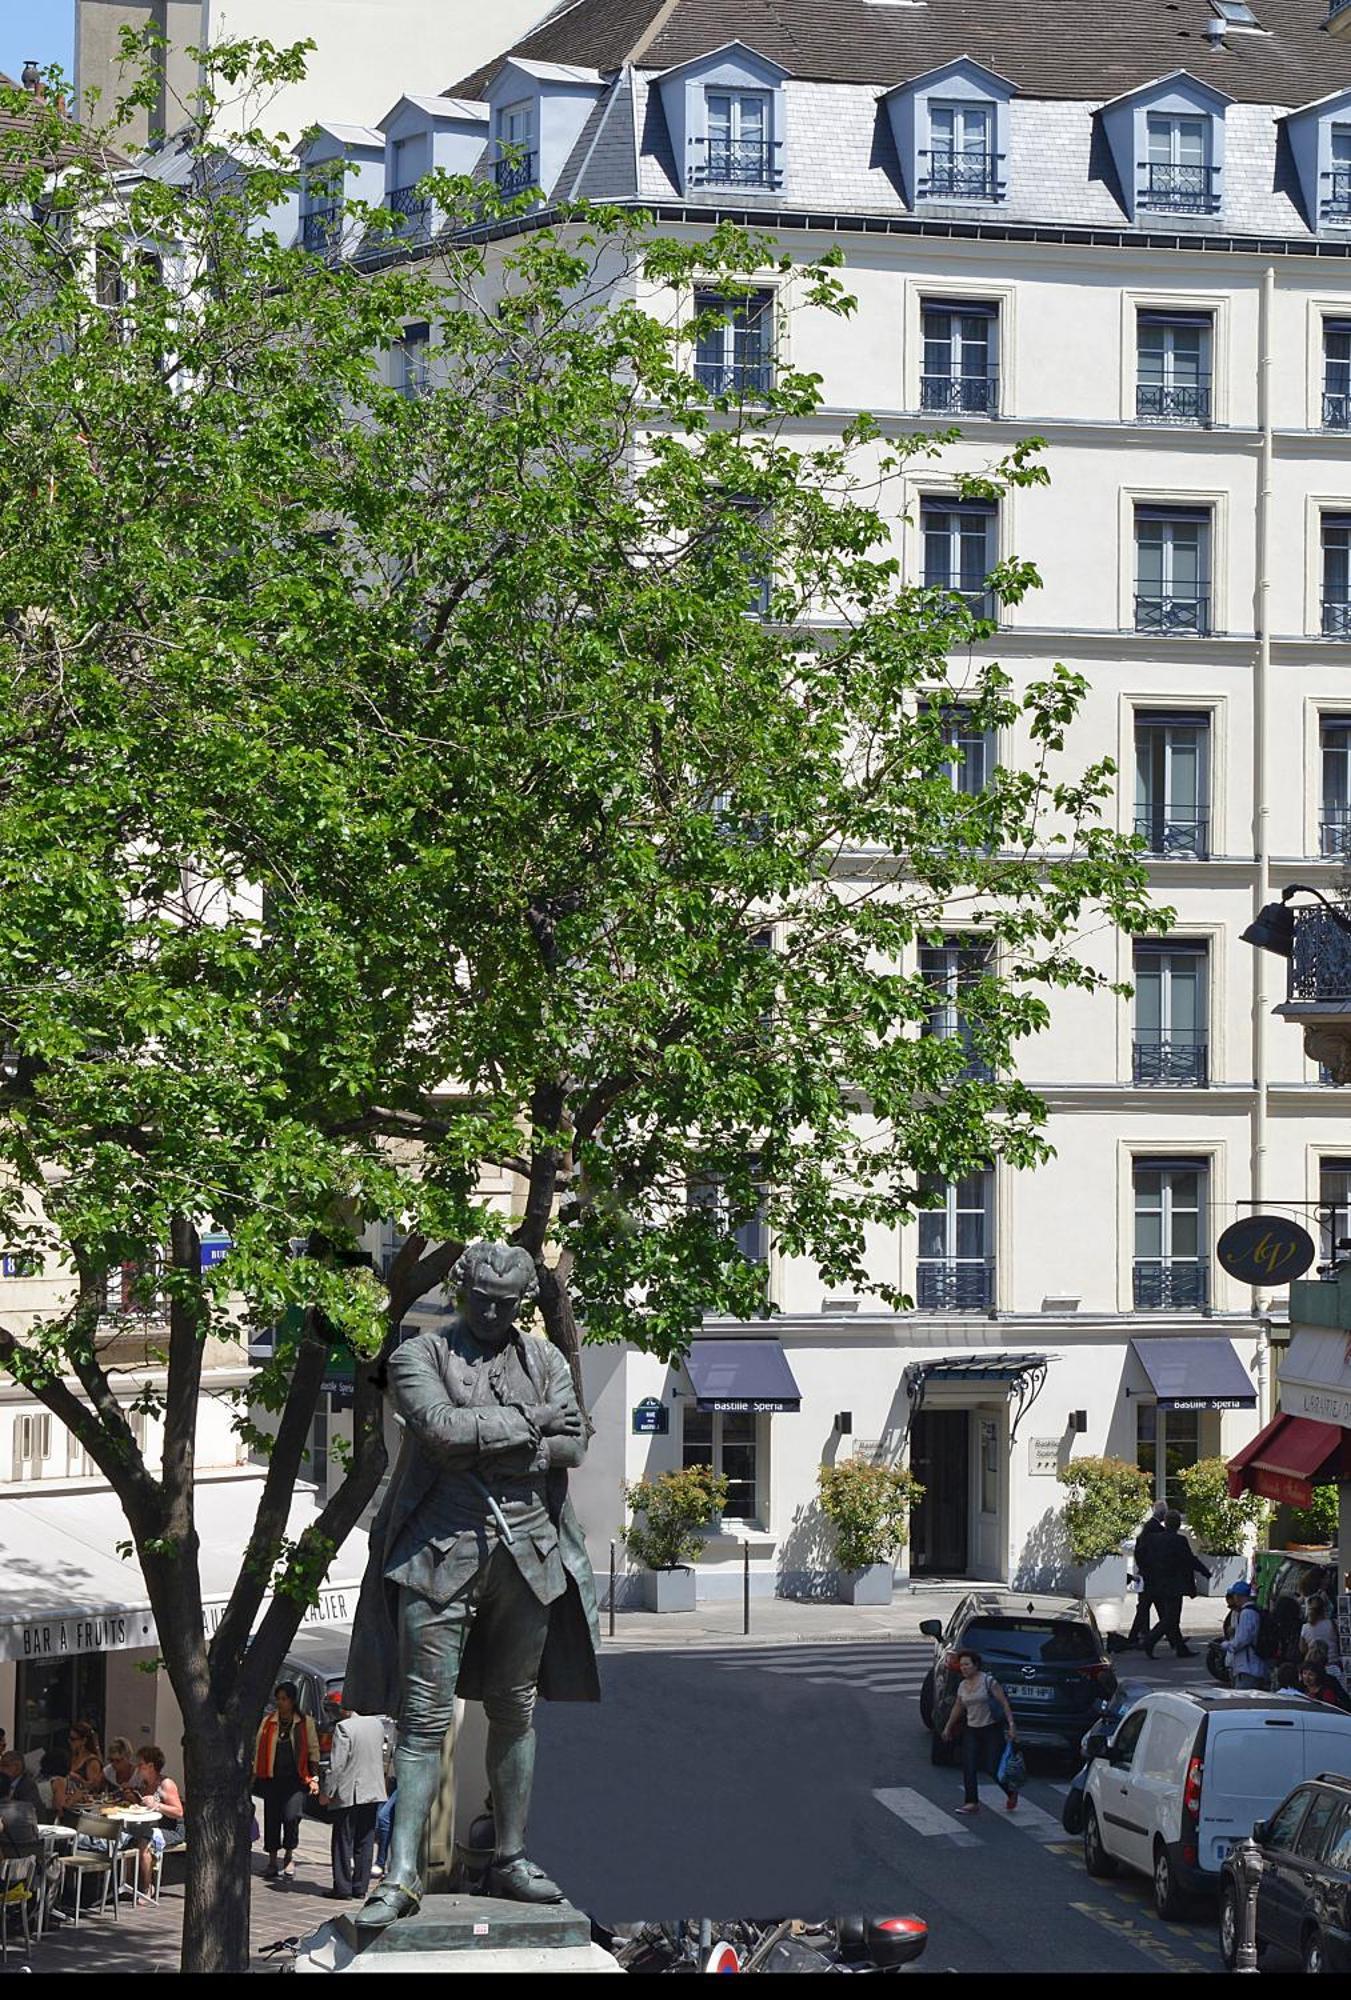 Hotel Bastille Speria Париж Экстерьер фото